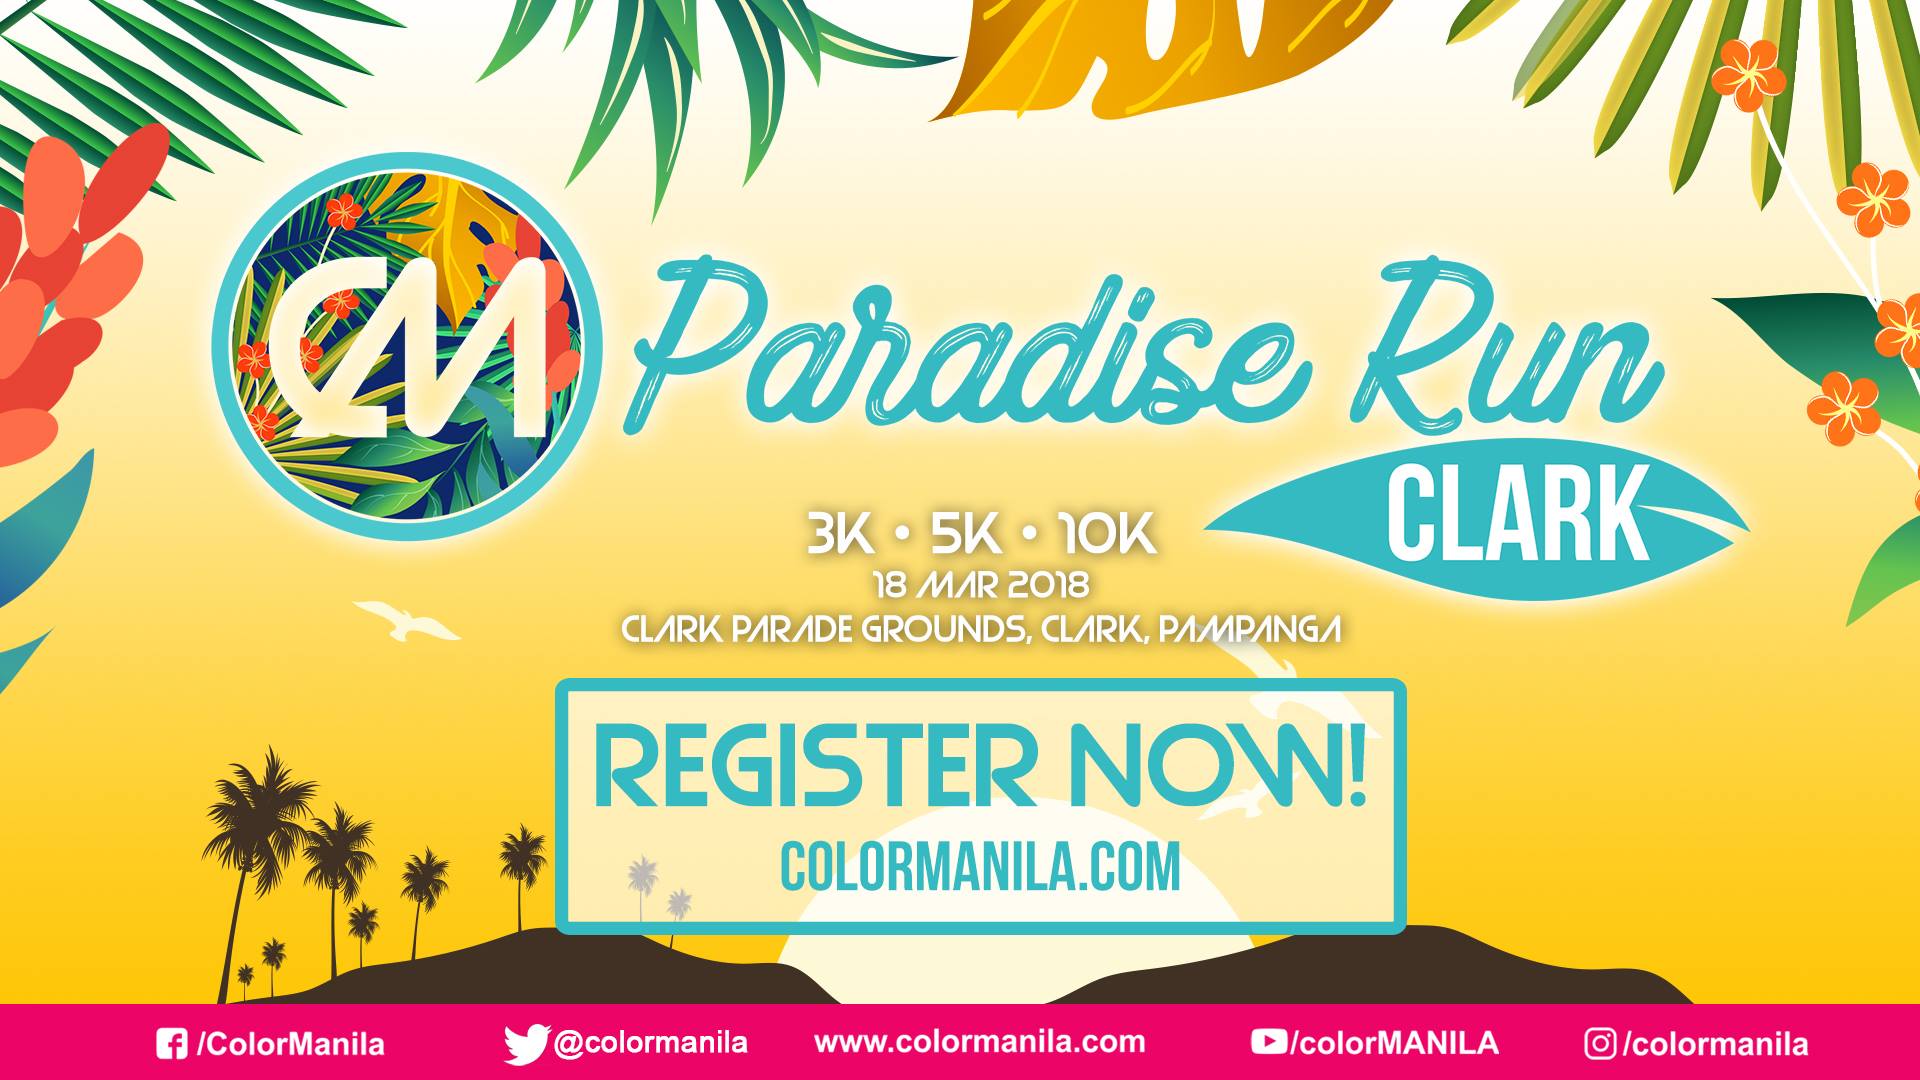 Color Manila Paradise Run Clark on March 18